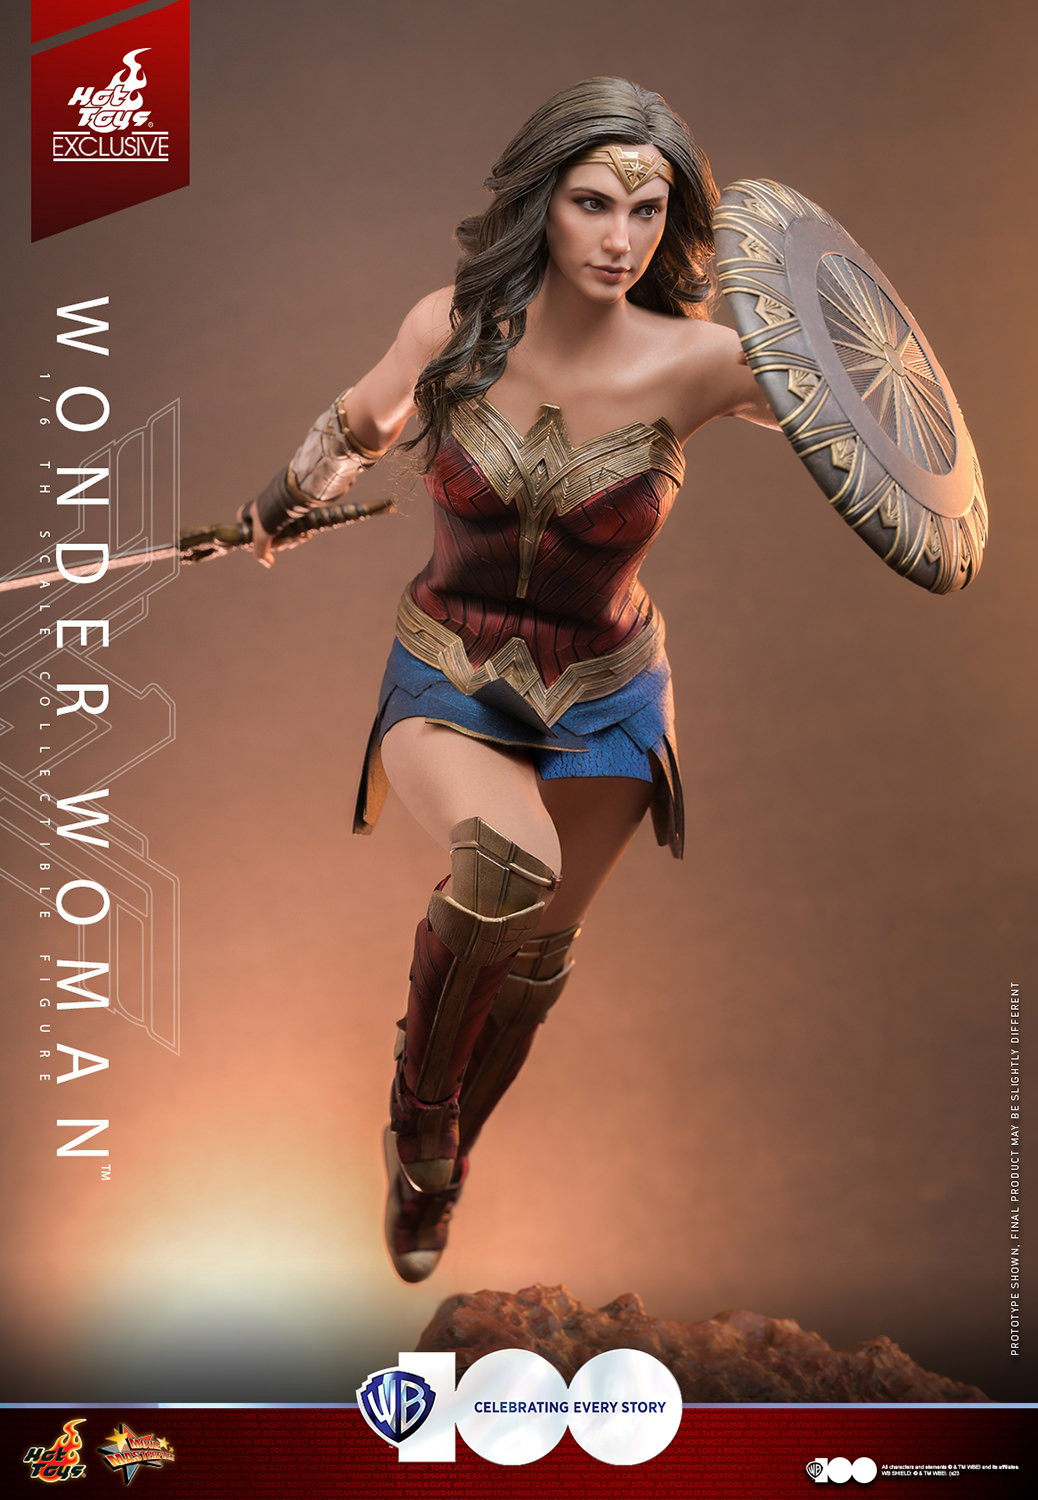 Wonder Woman': 5 wonderfully feminist moments